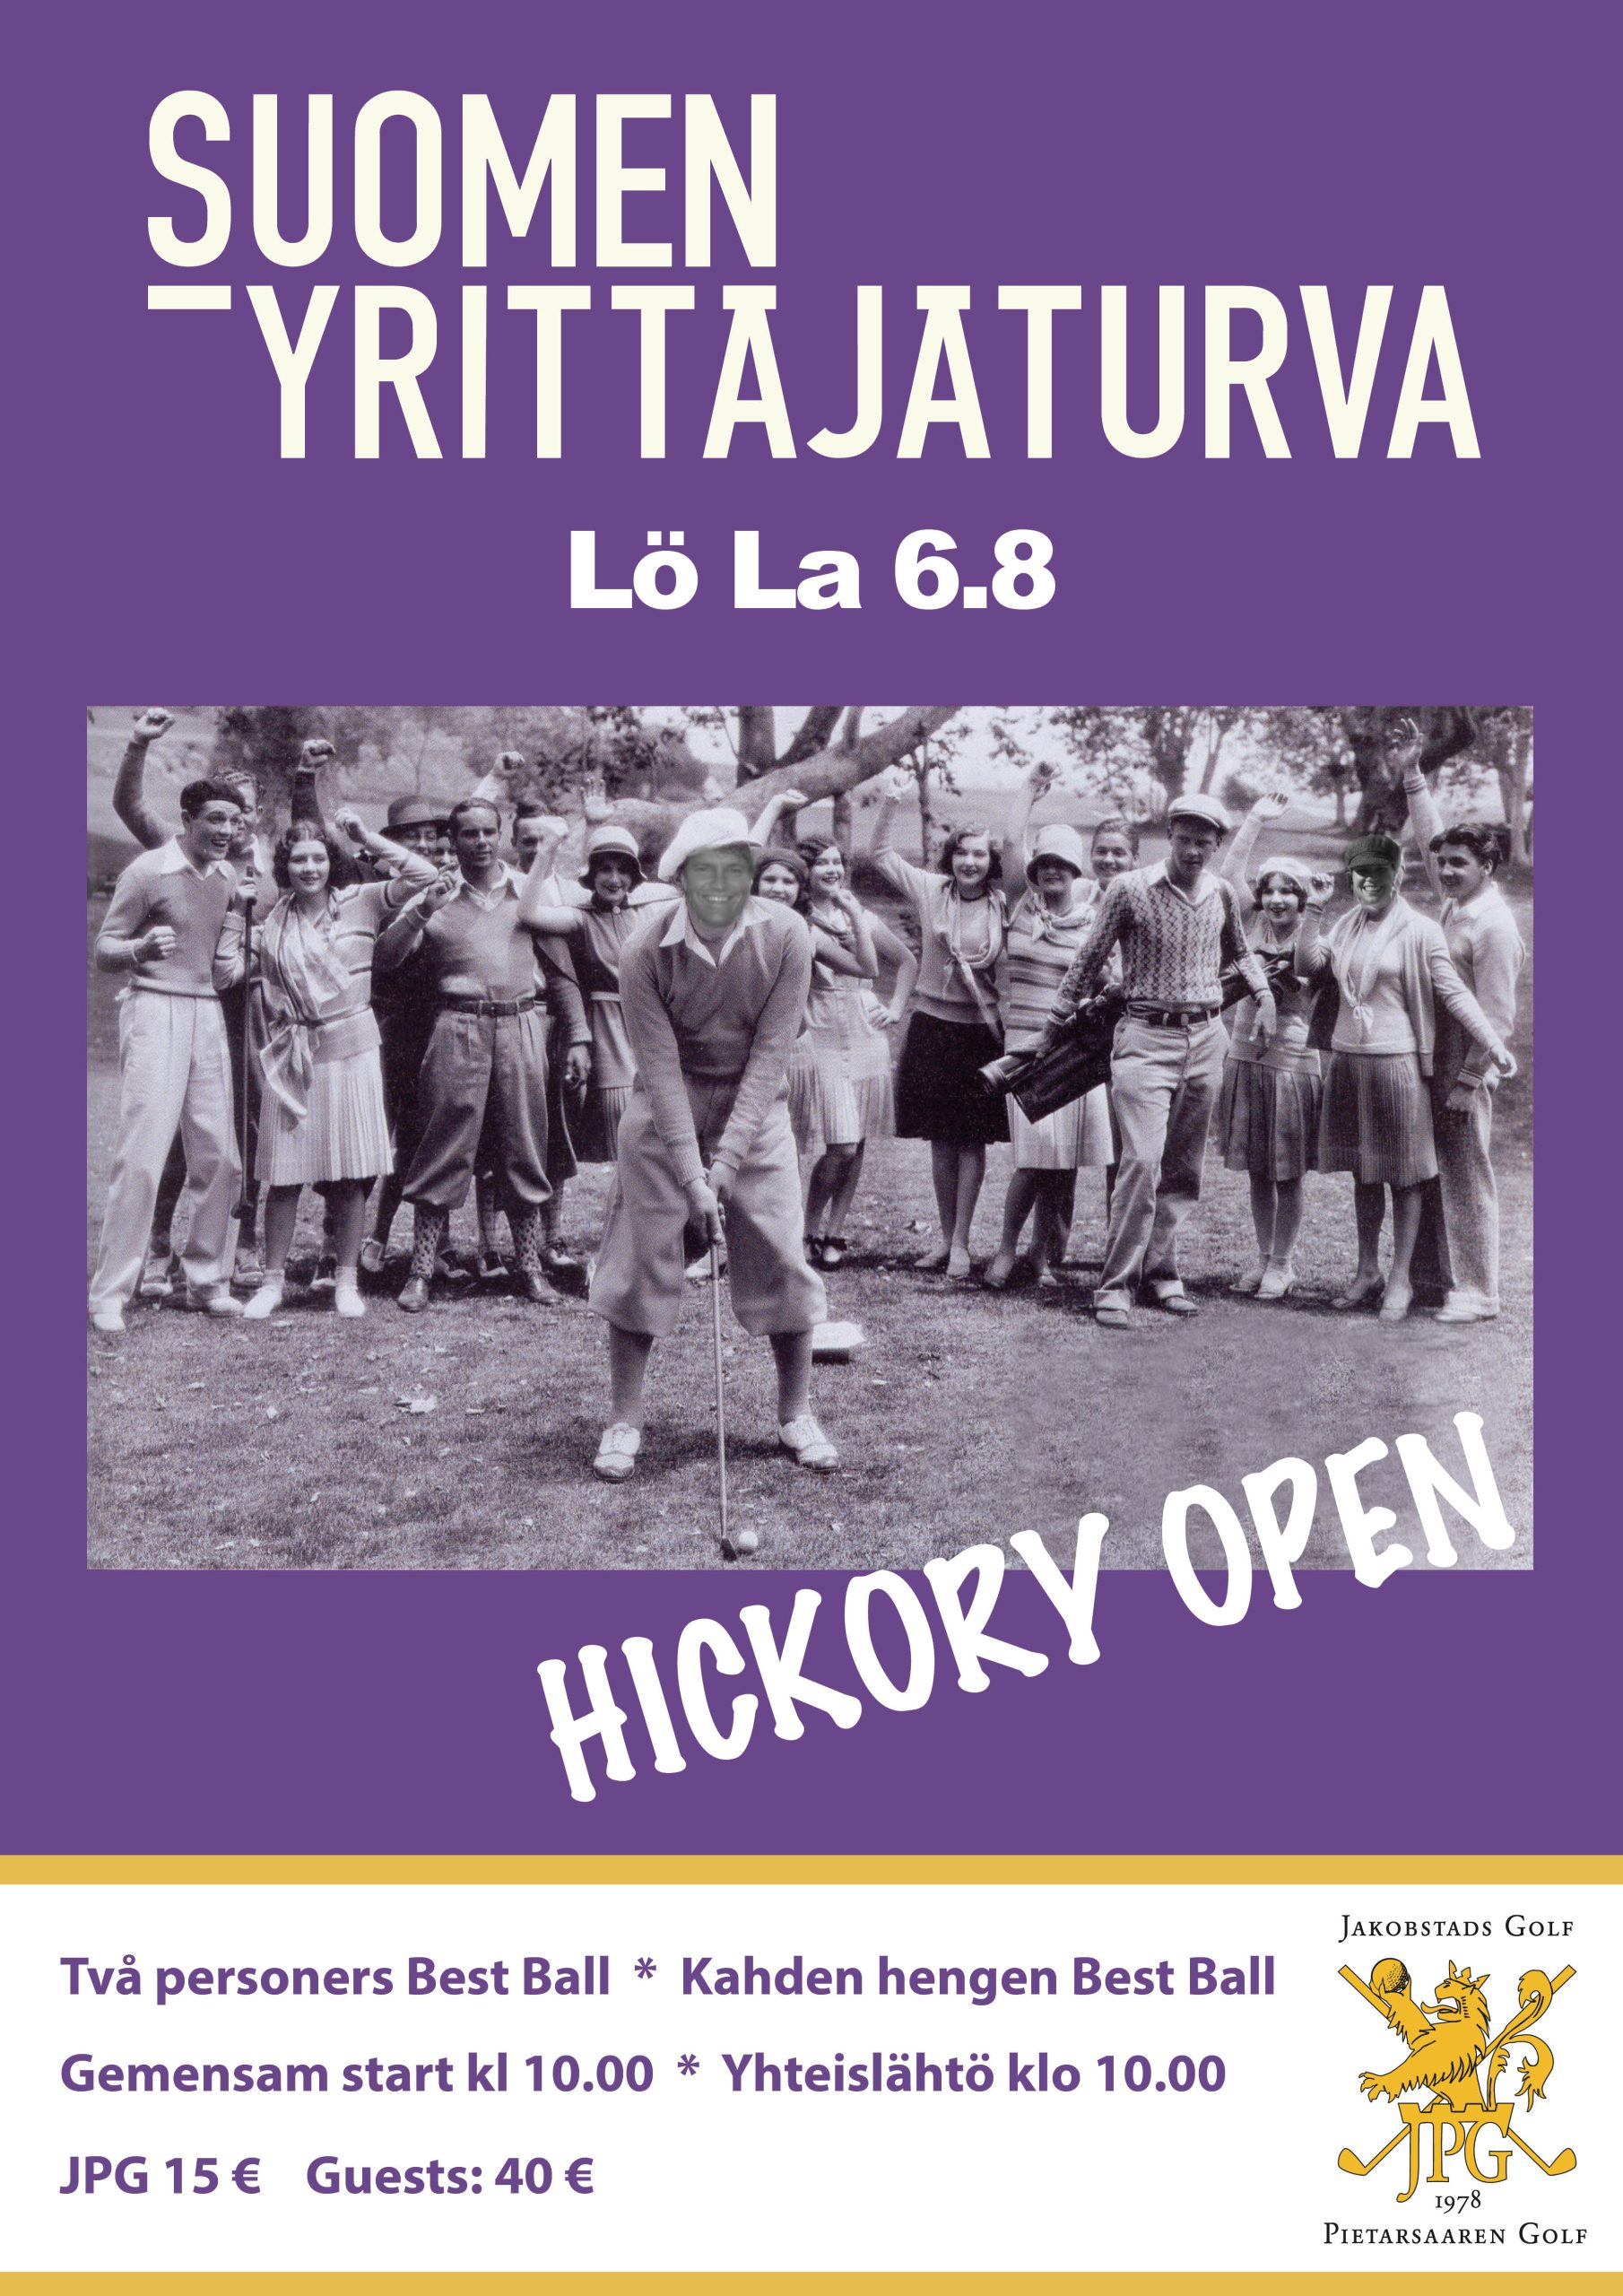 You are currently viewing Suomen Yrittäjäturva Hickory Open (FLYTTAD SÖ 7.8)